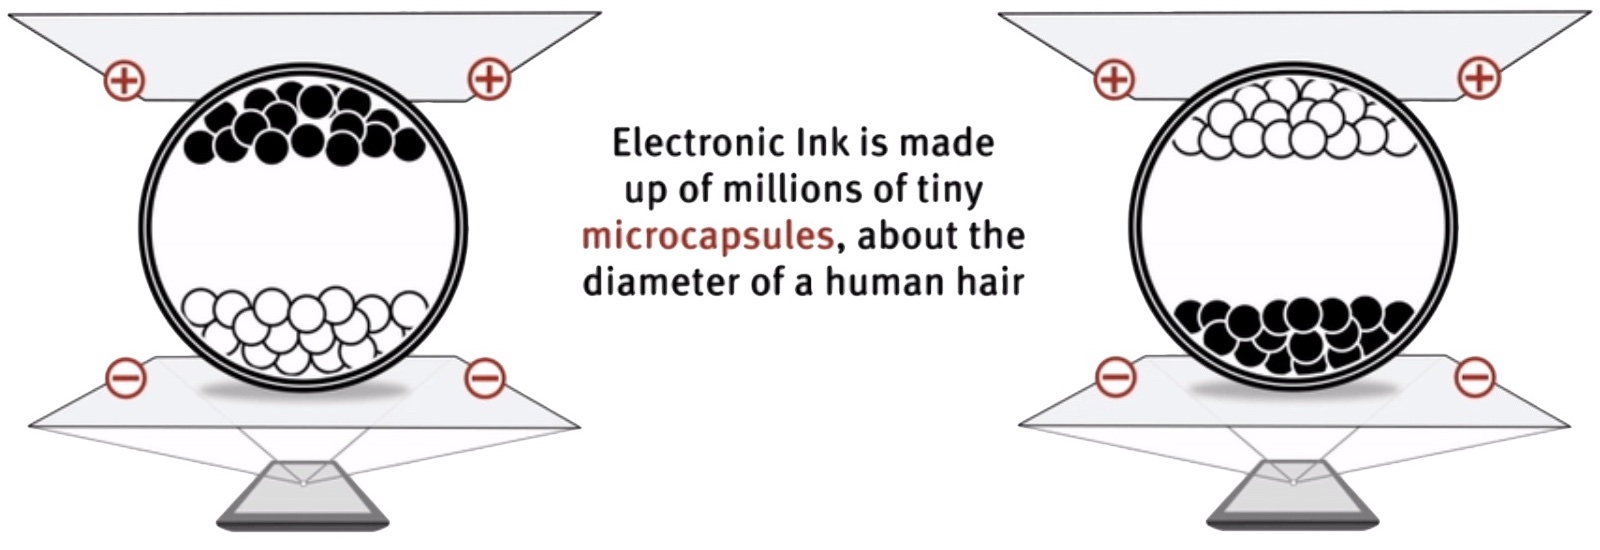 e-ink technology